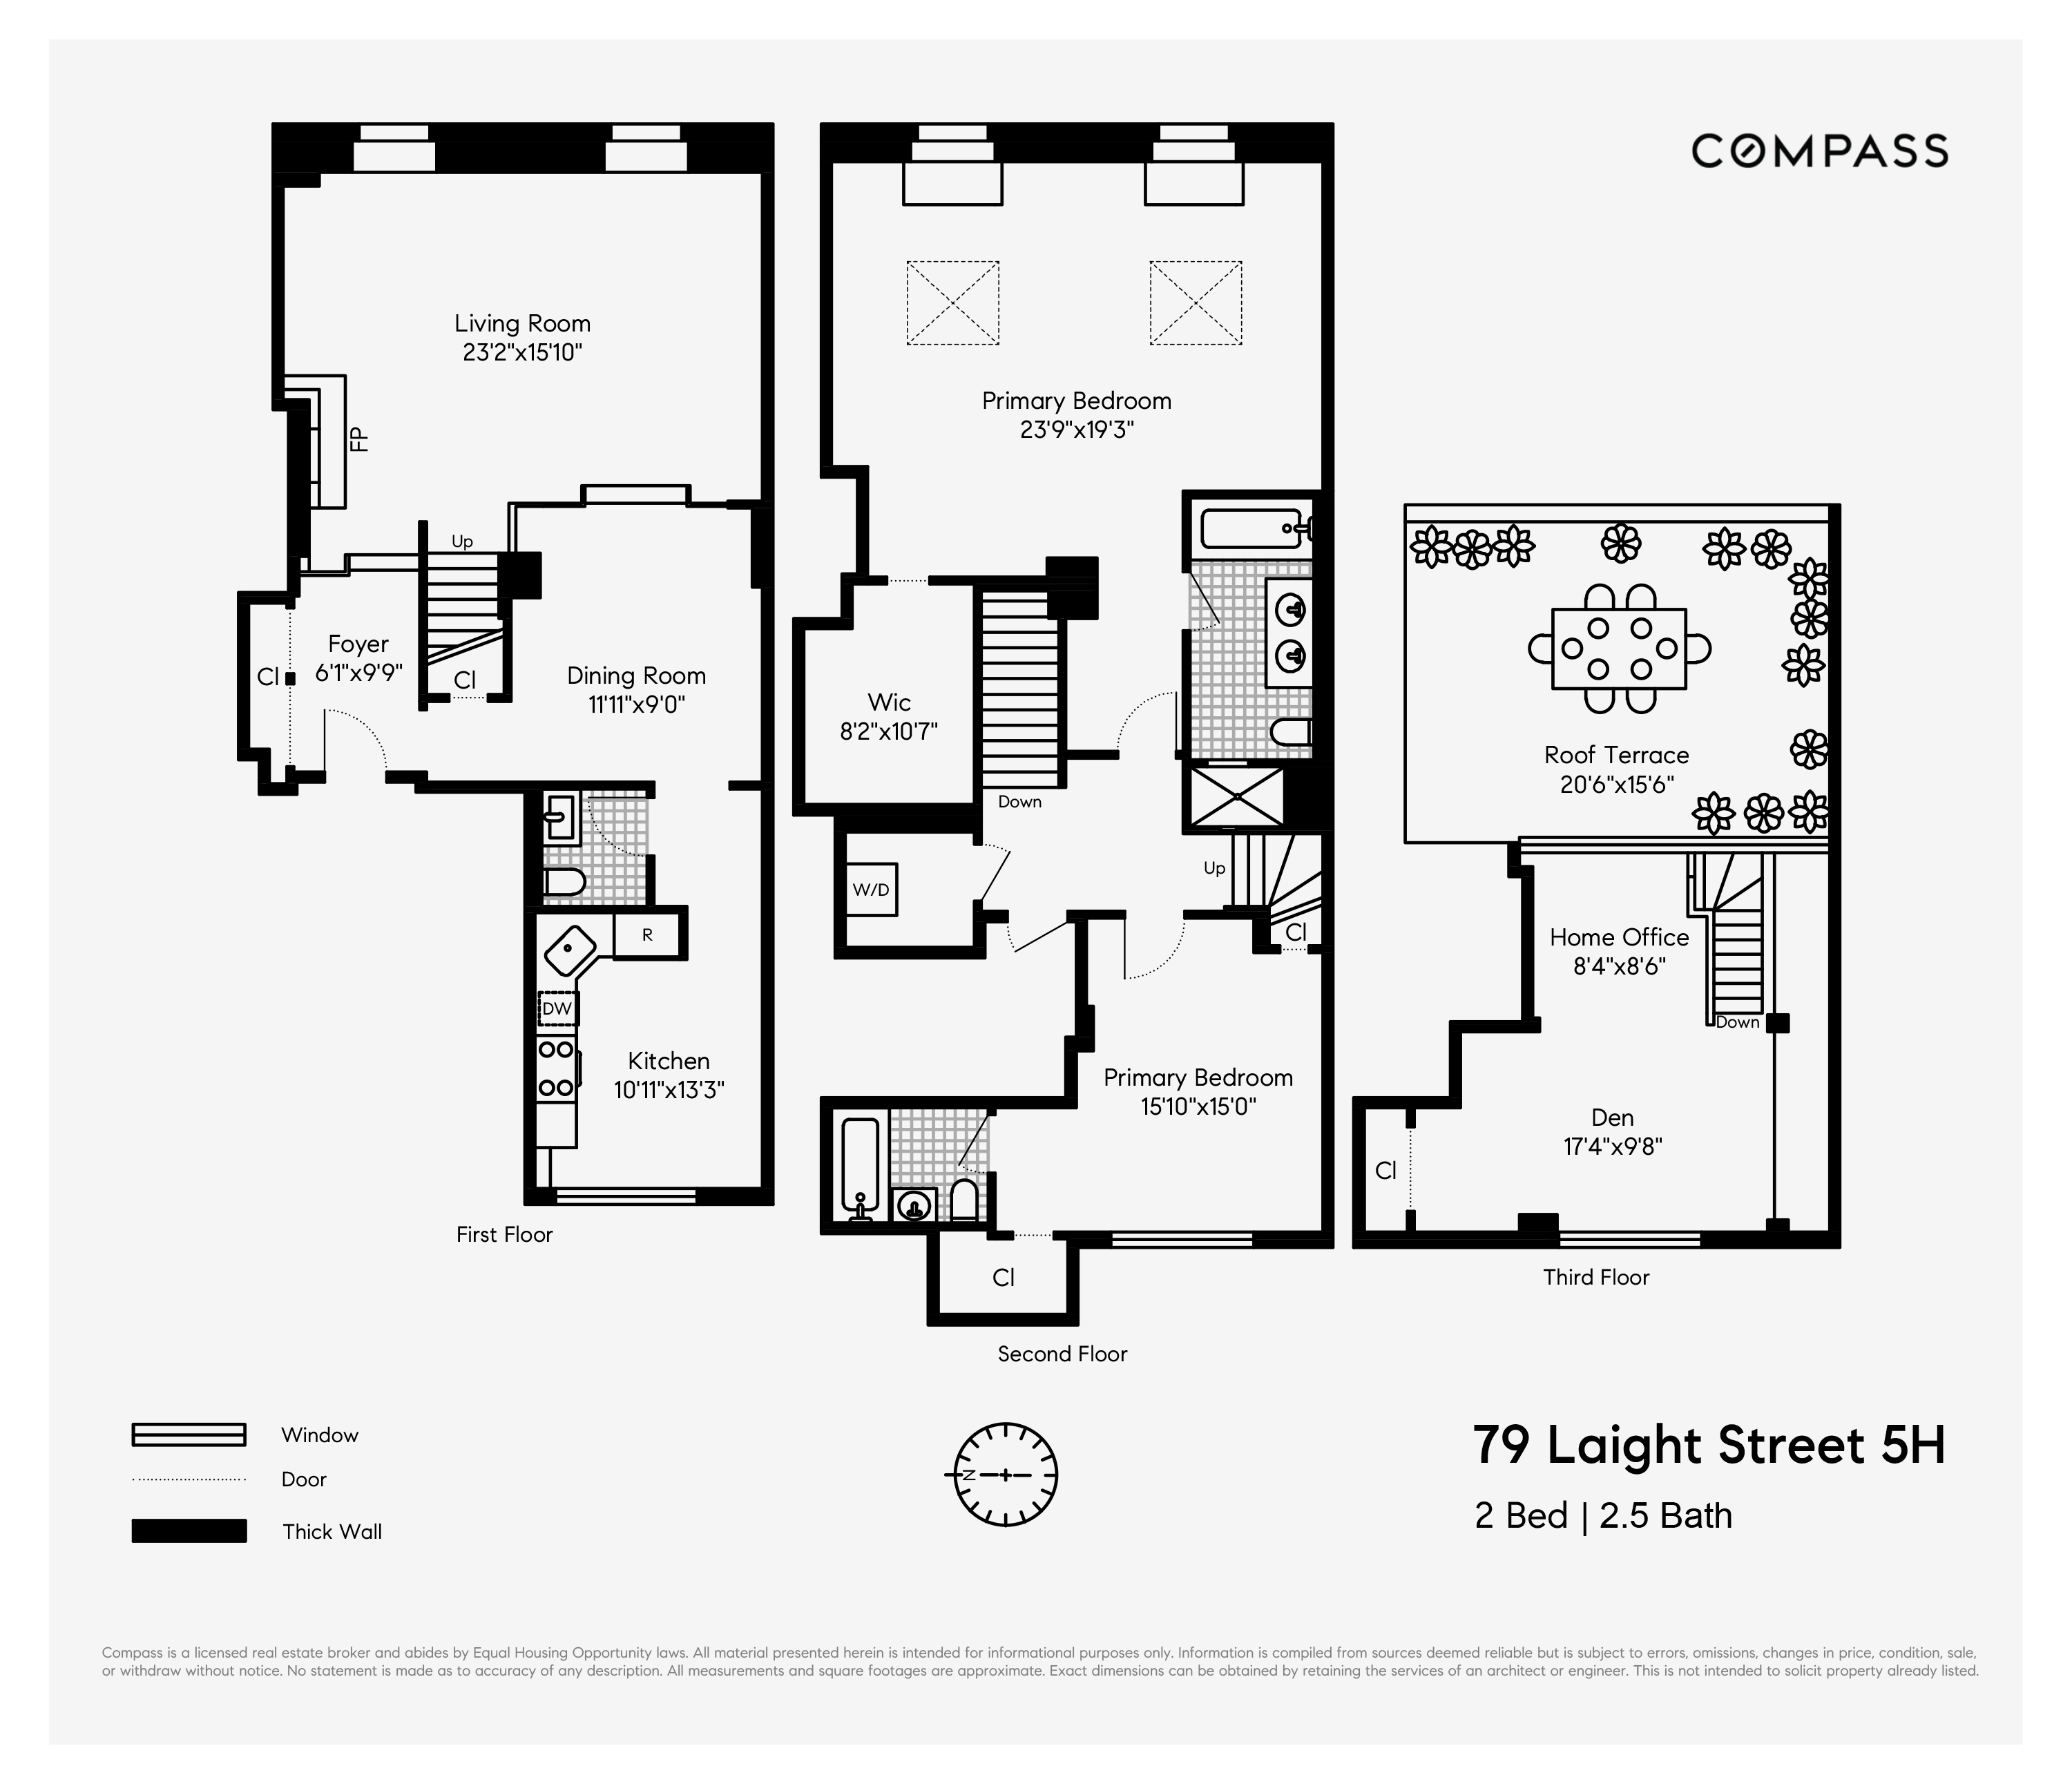 Floorplan for 79 Laight Street, 5H